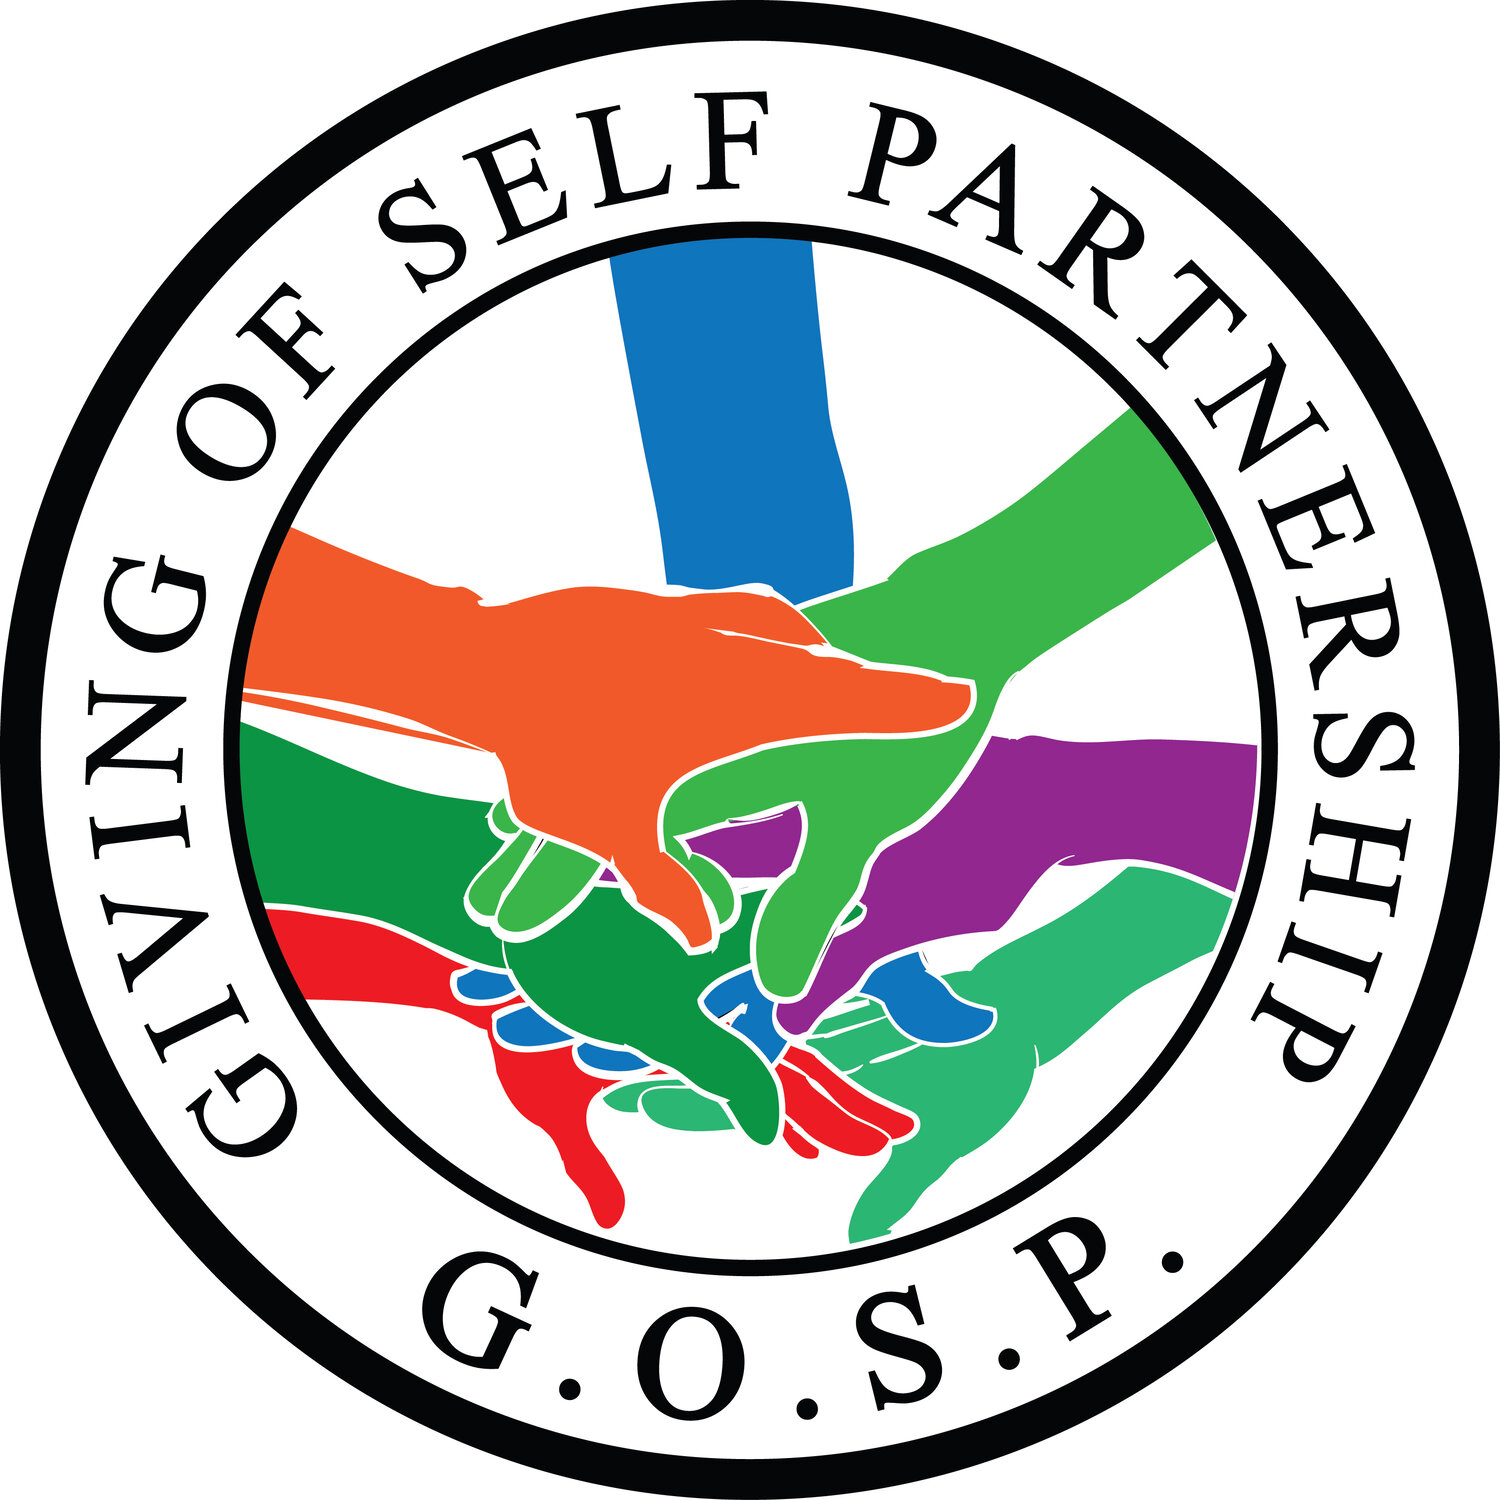 Giving Of Self Partnership